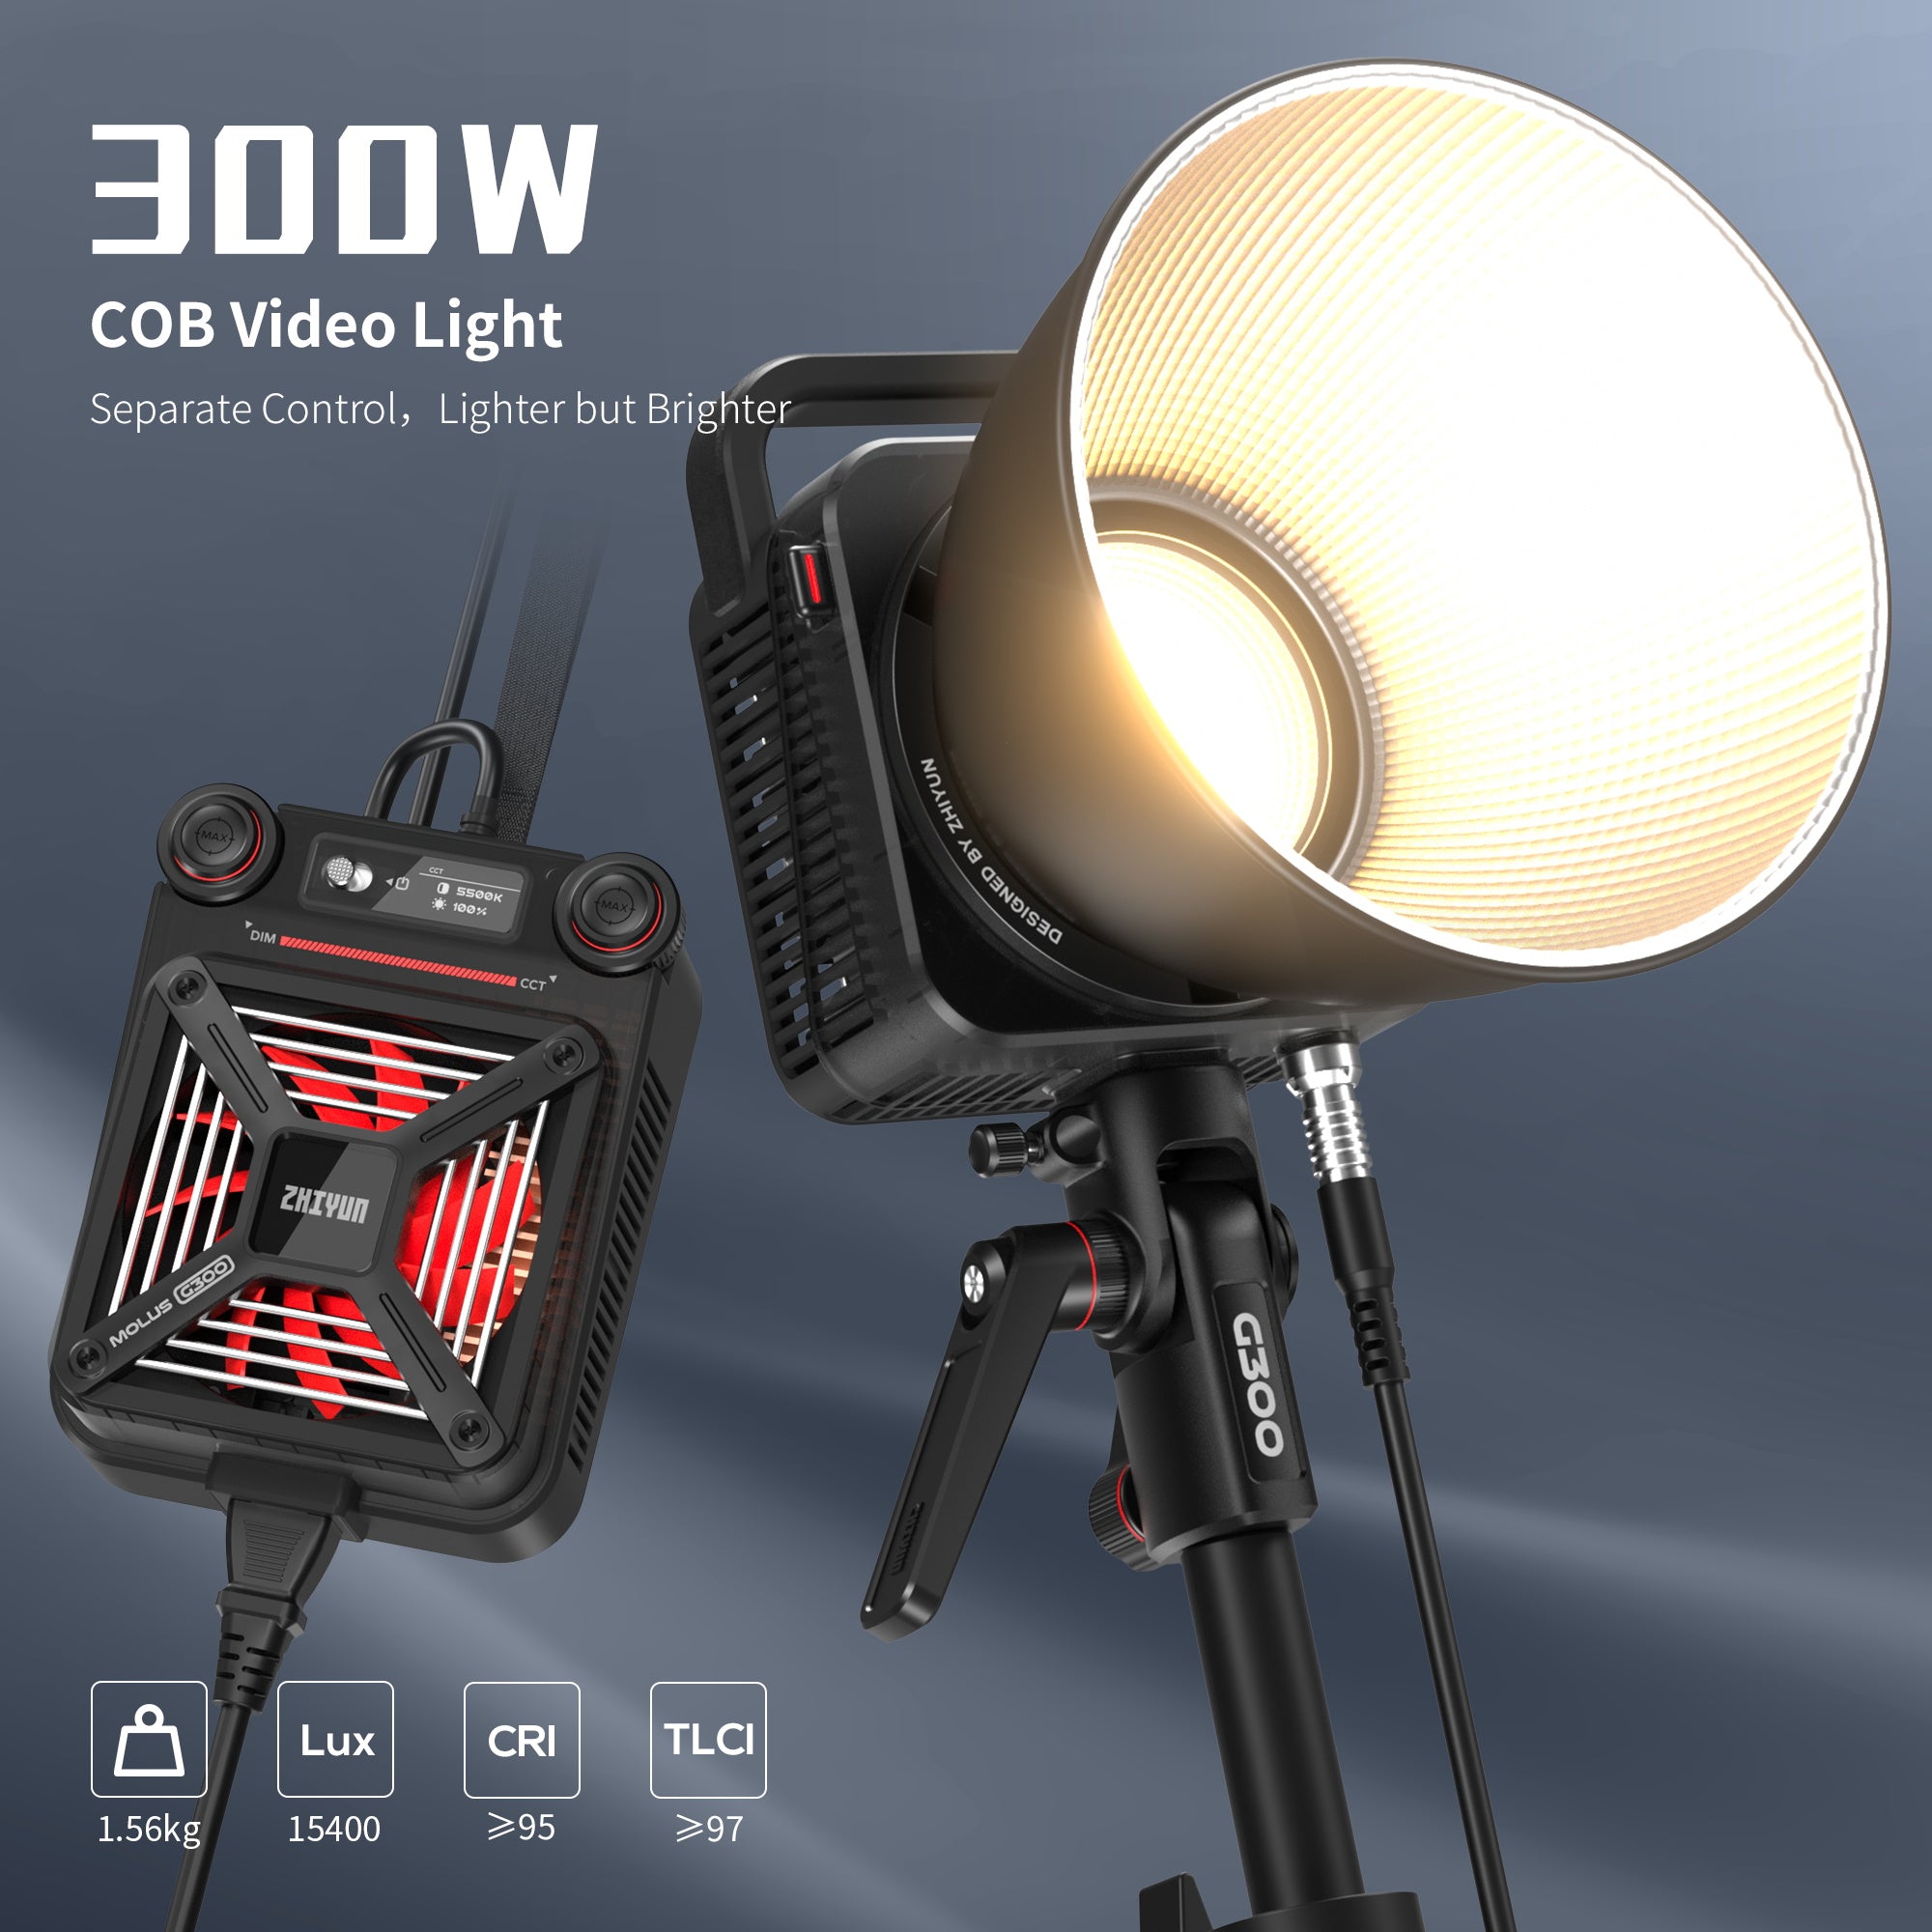 ZHIYUN MOLUS G300 300W COB Video Light